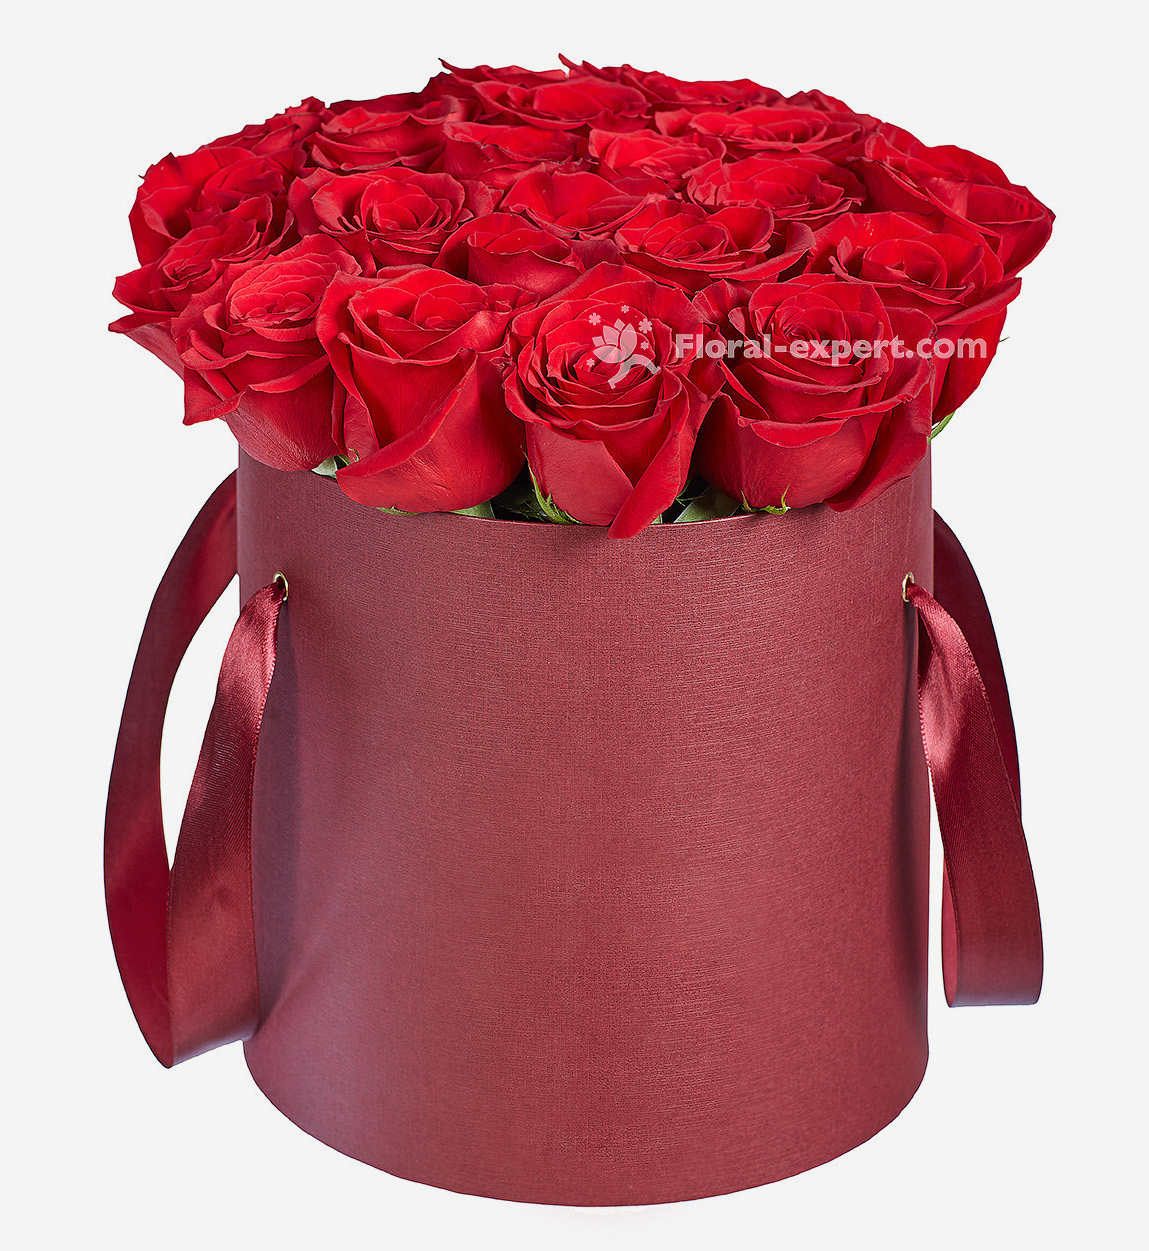 Red roses box